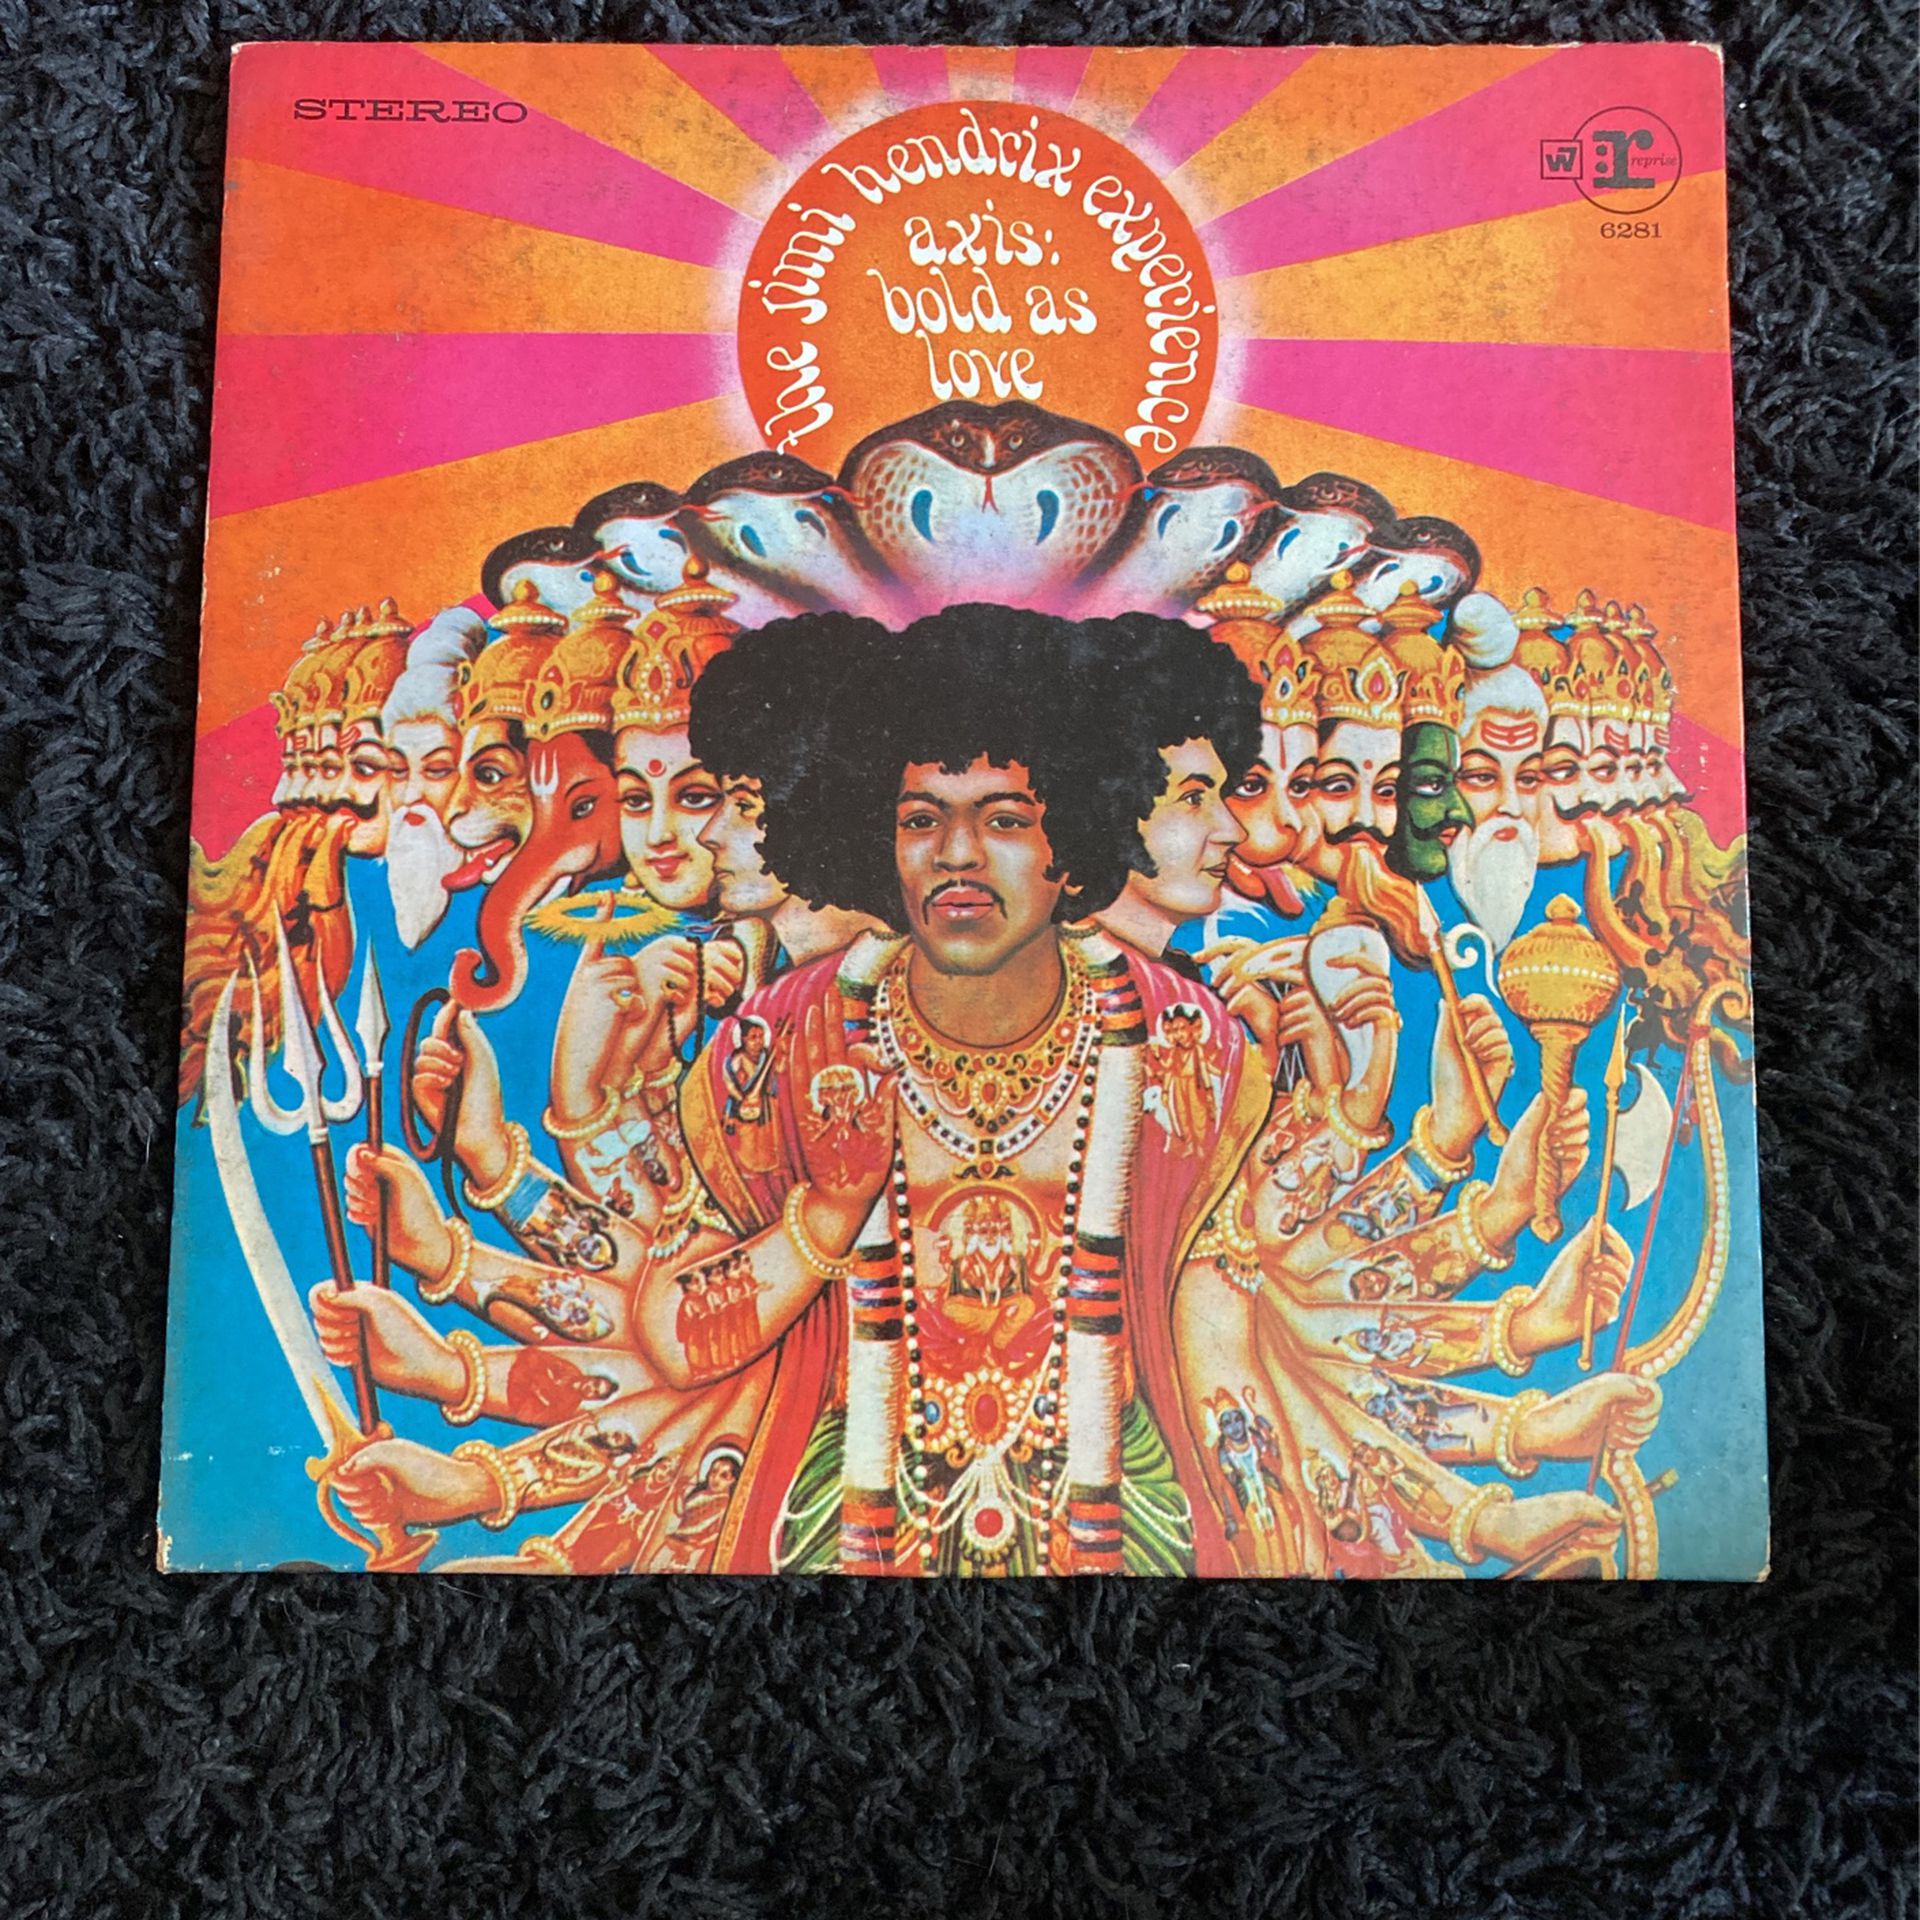 The Jimi Hendrix experience Vinyl 